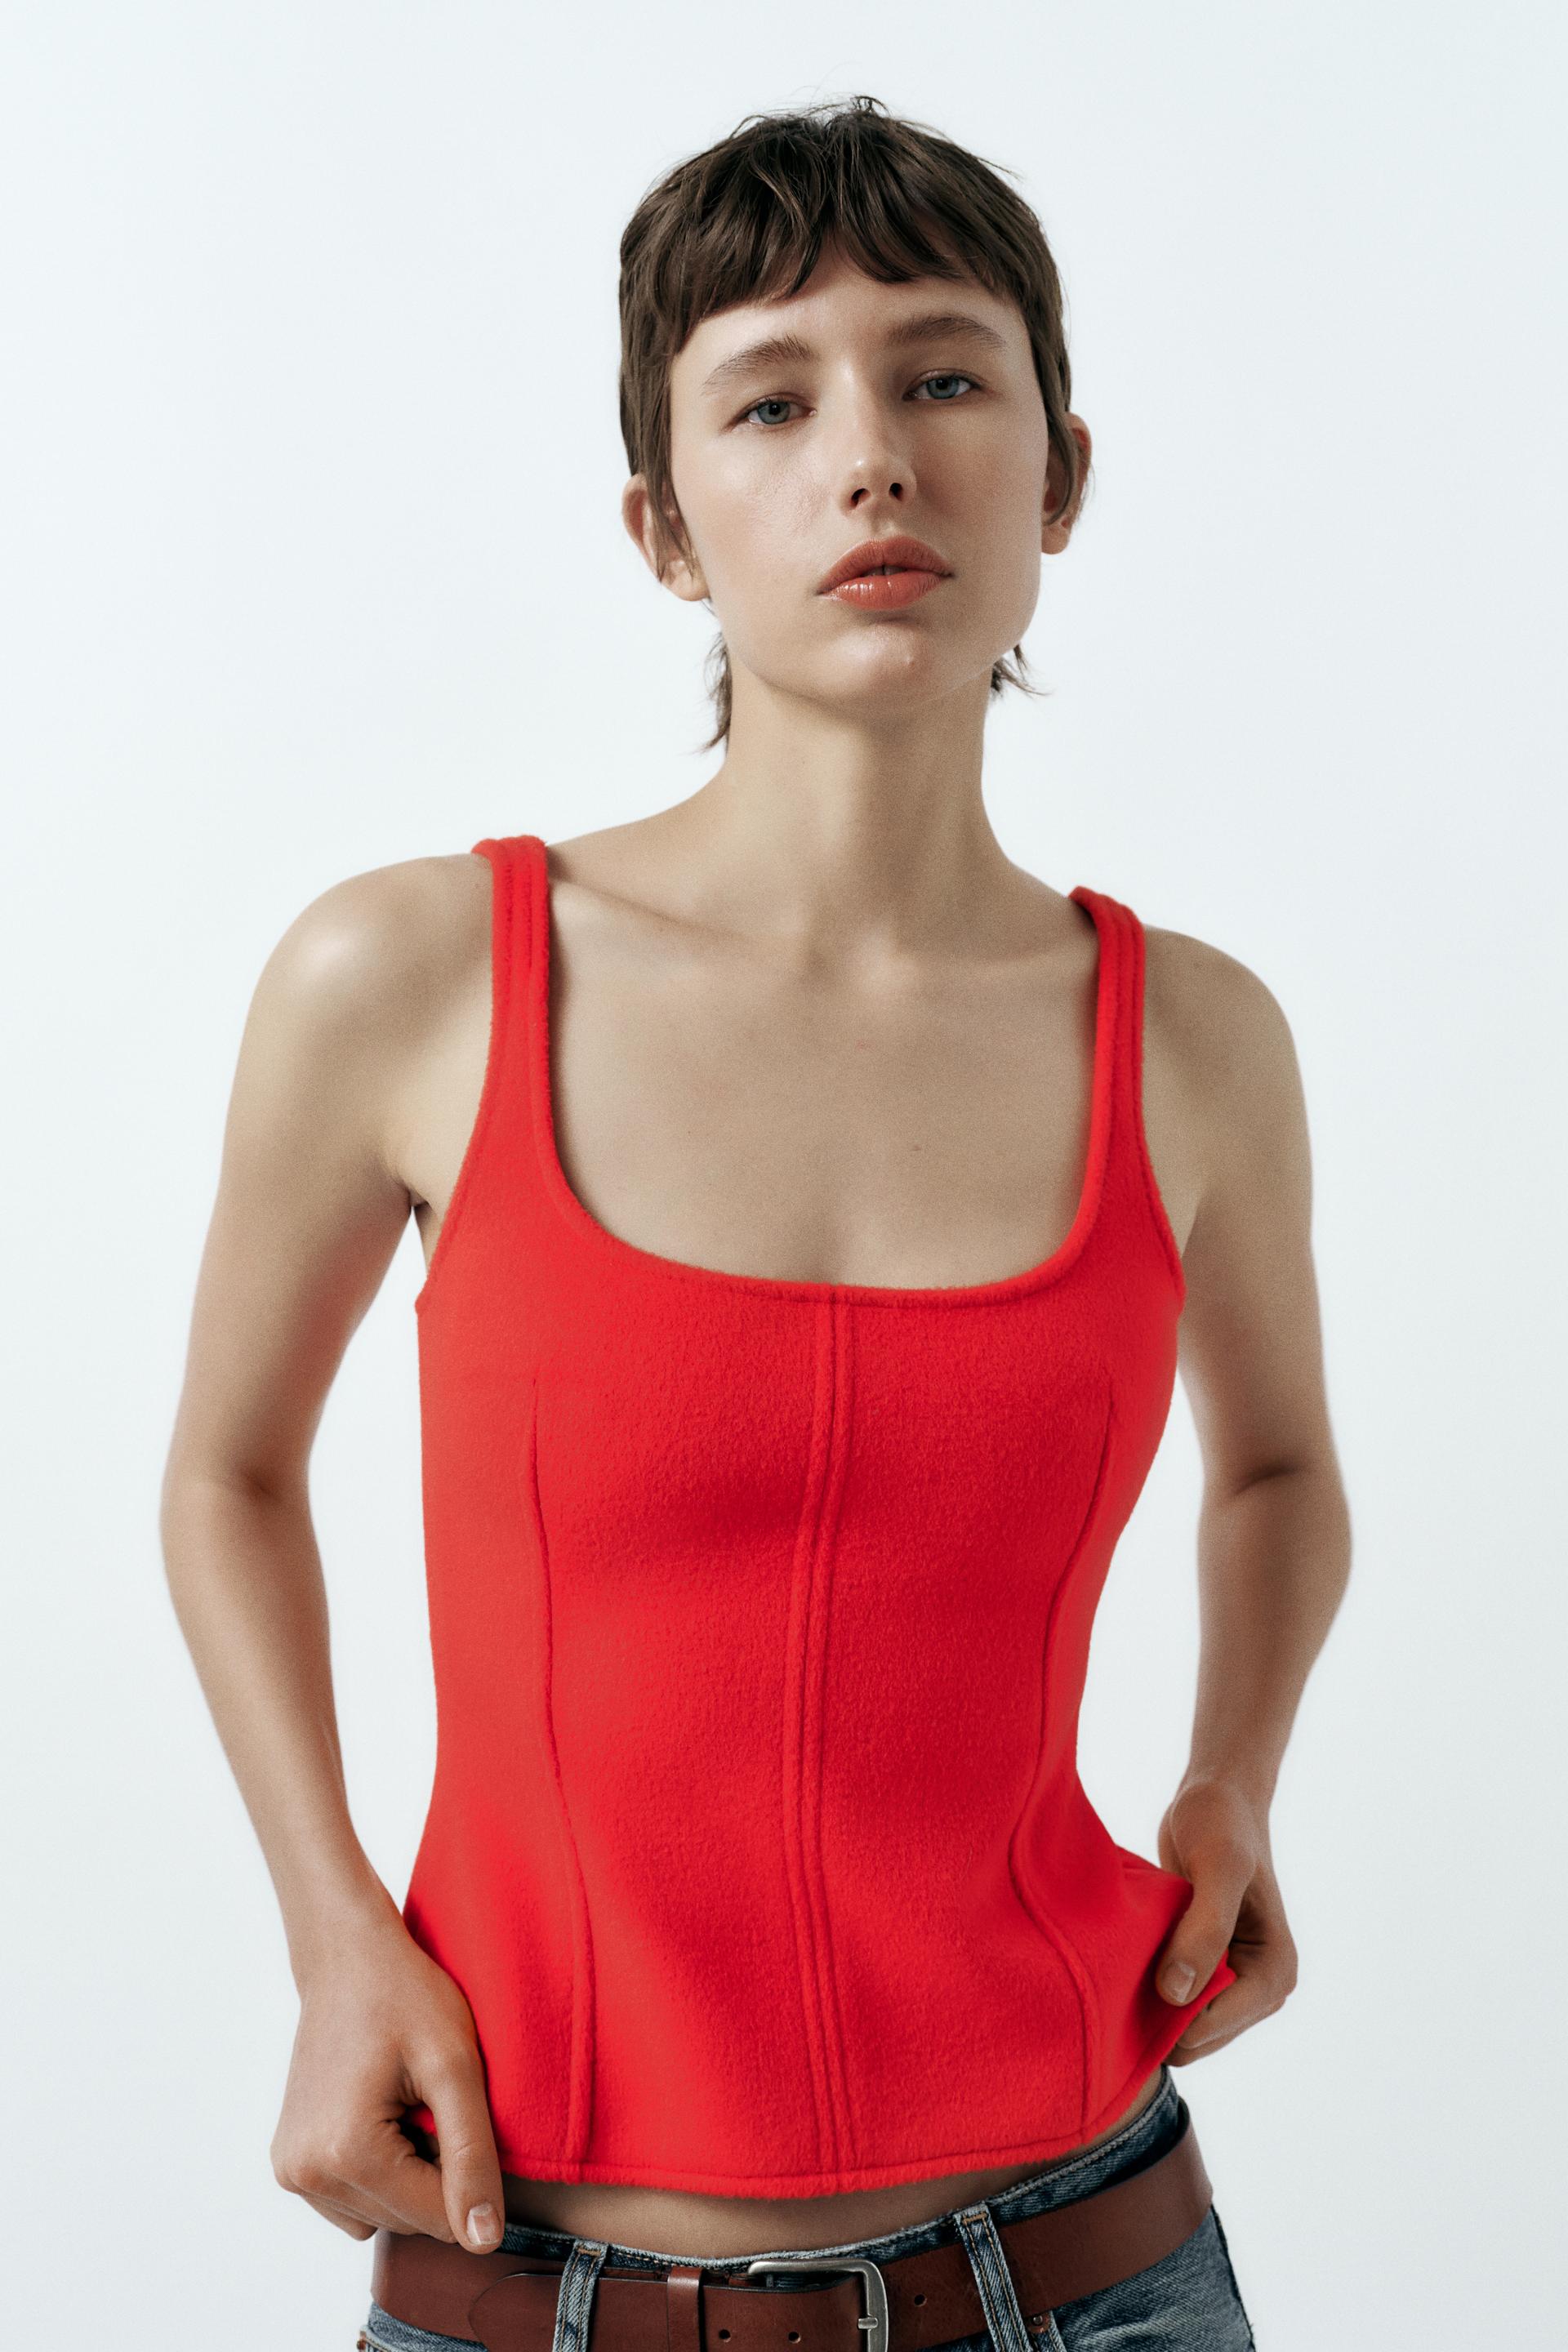 Zara Sports Bra Red White Trim Tank Crop Top Activewear Nylon Size medium